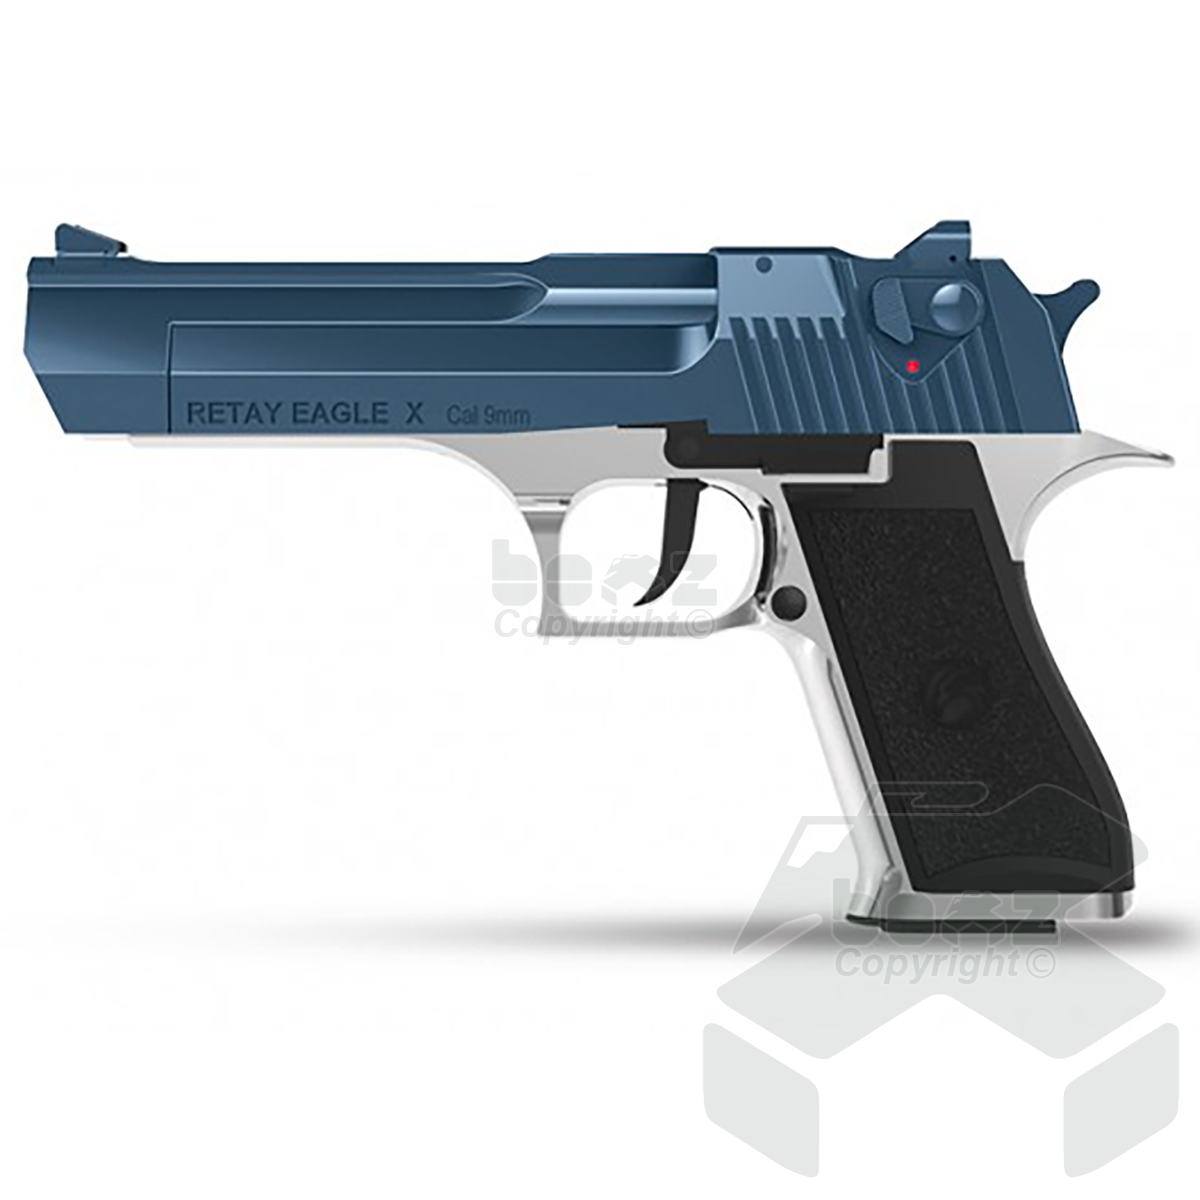 Retay EagleXU Blank Firing Pistol - 9mm - Chrome